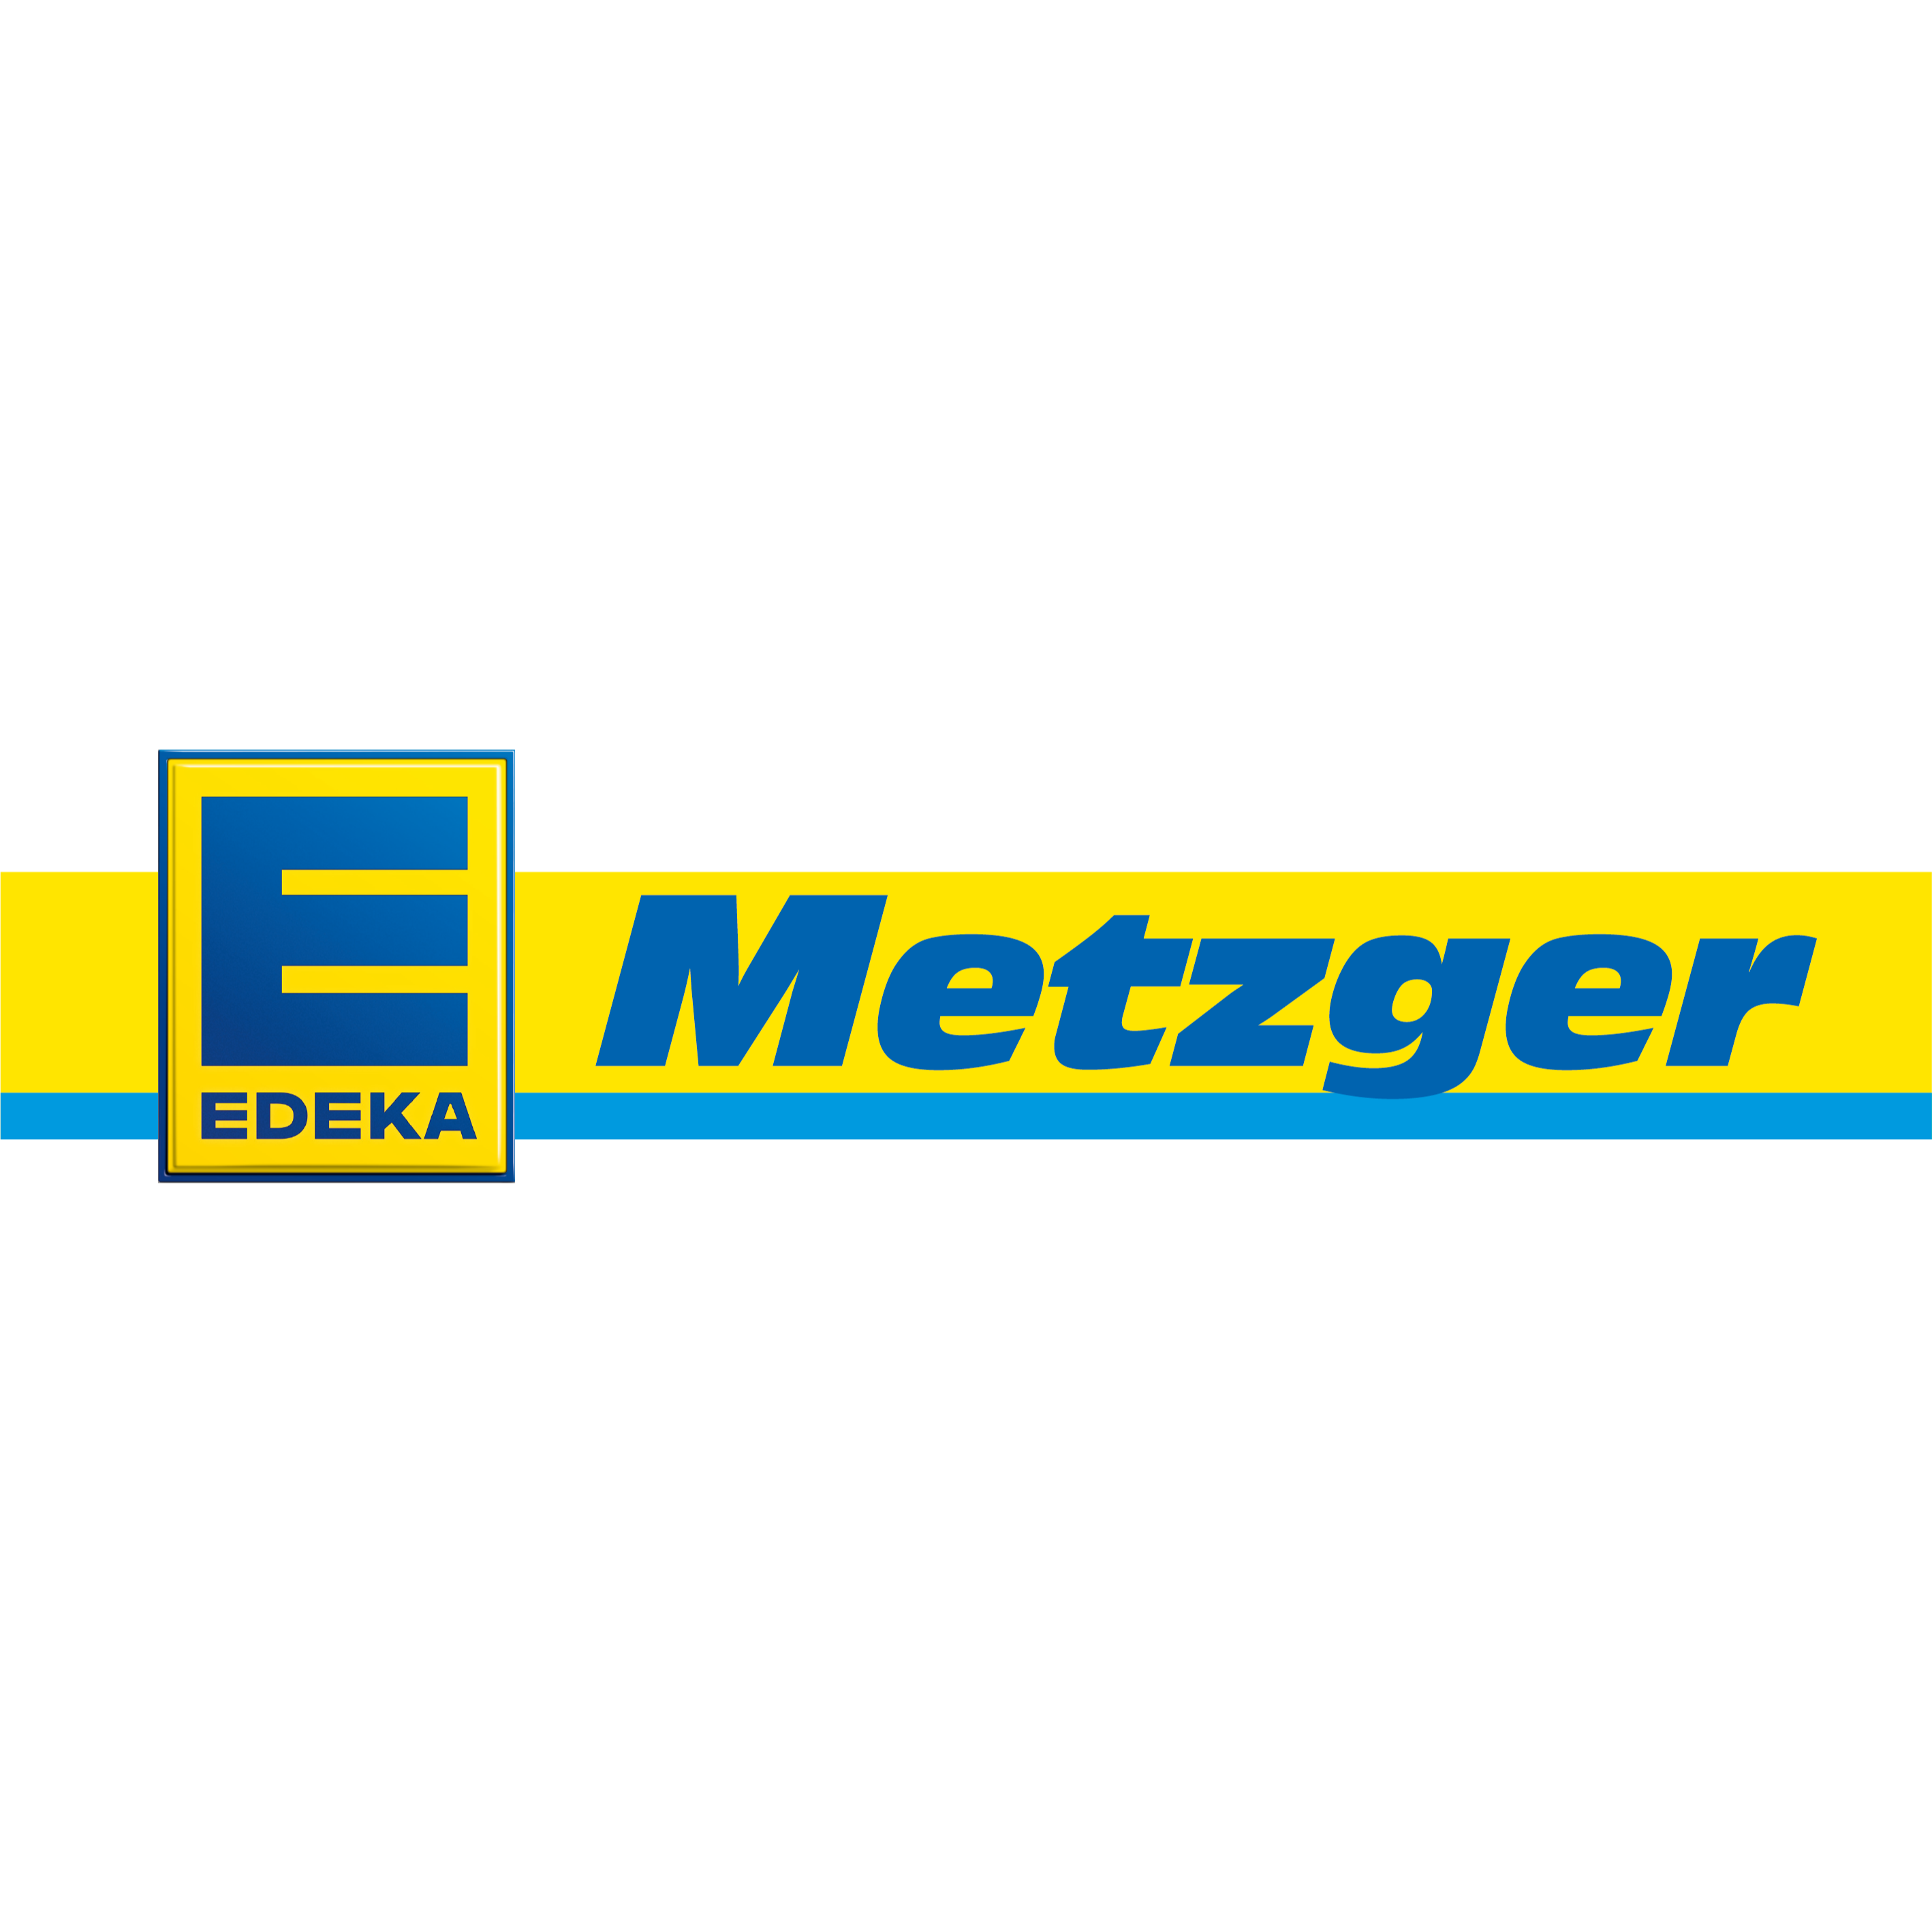 Edeka Metzger in Bünde  